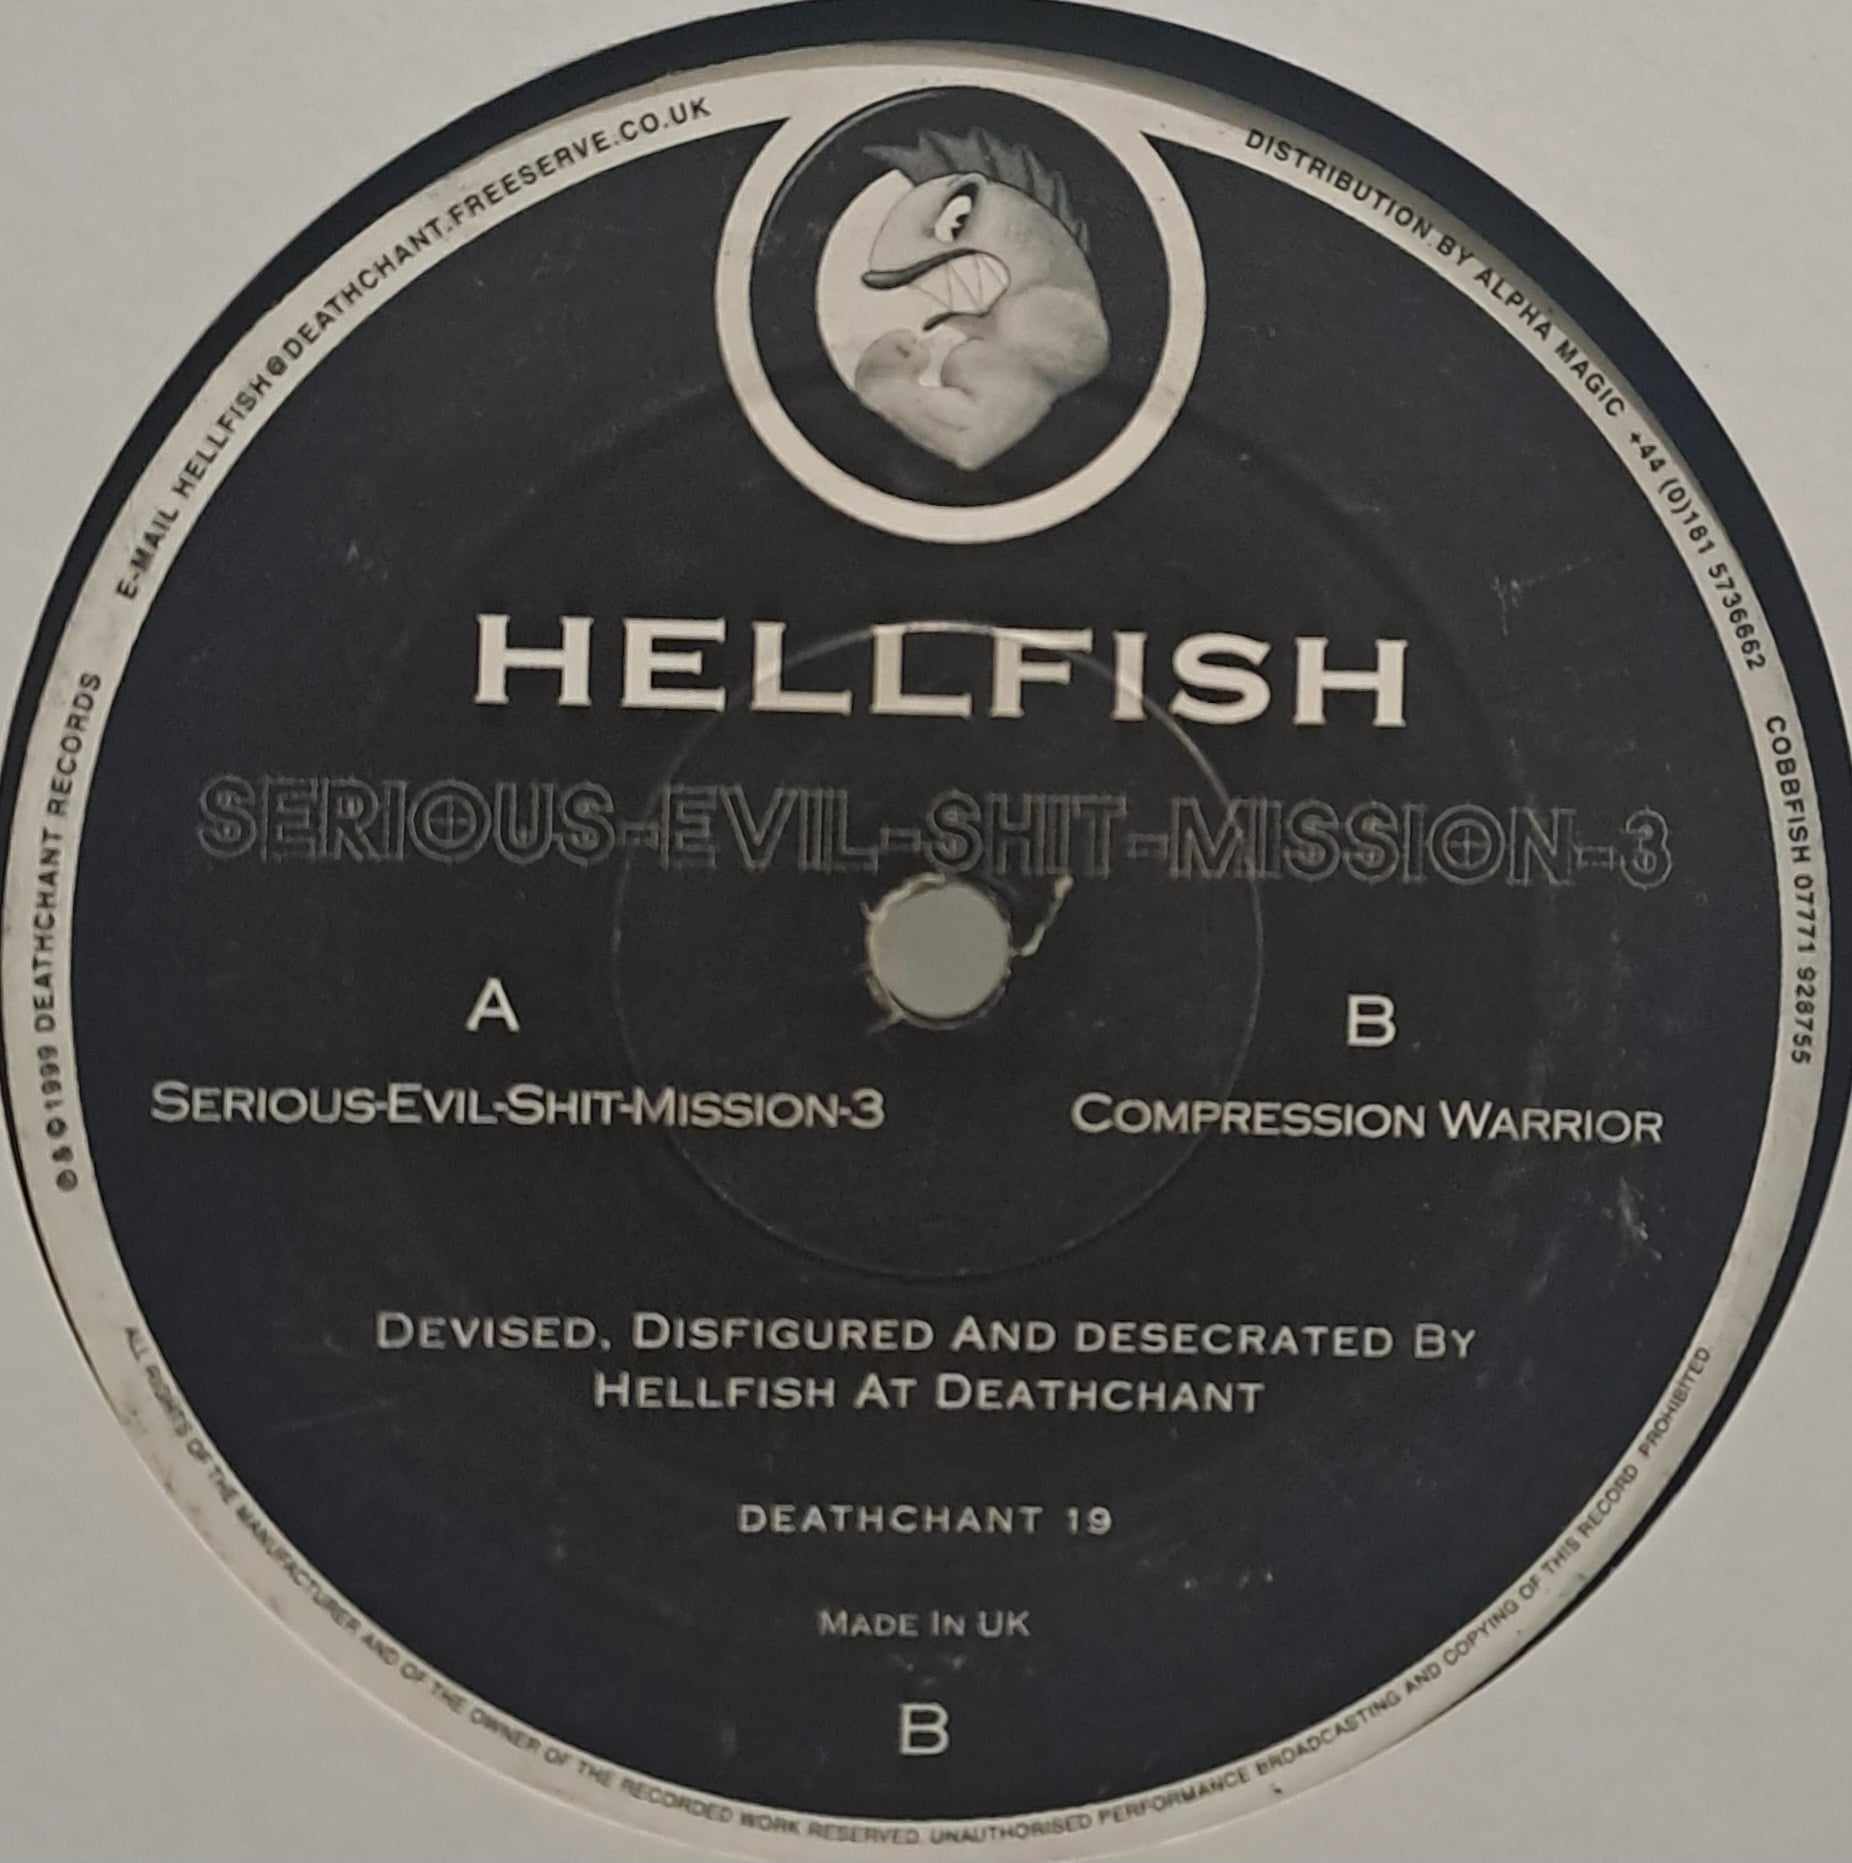 Deathchant 19 - vinyle hardcore